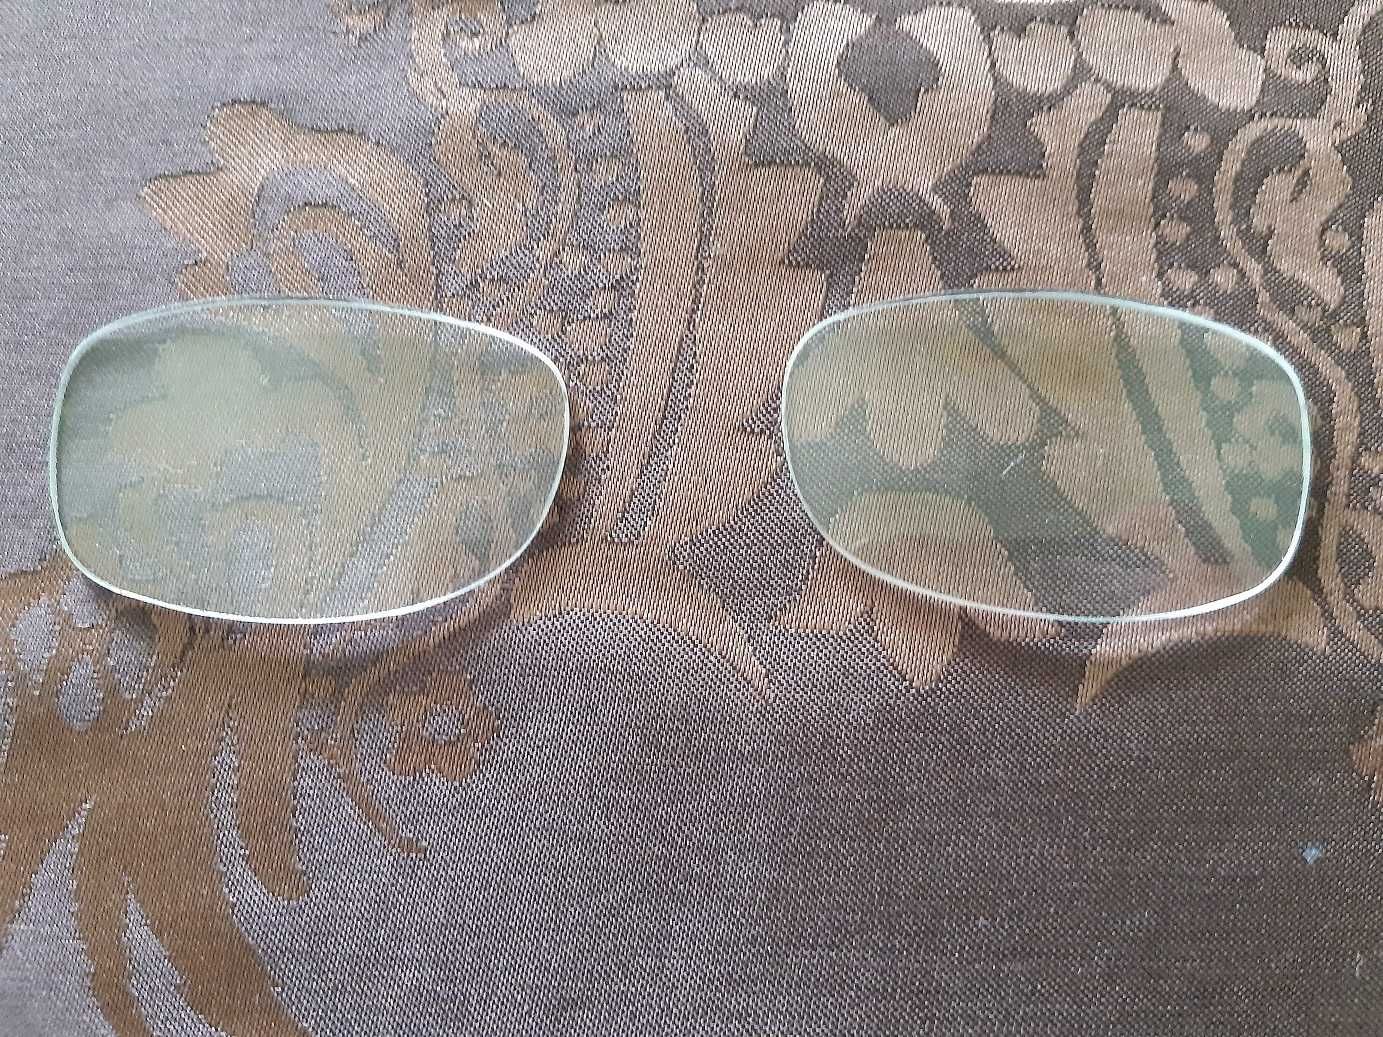 Lentile ochelari de vedere - distanta